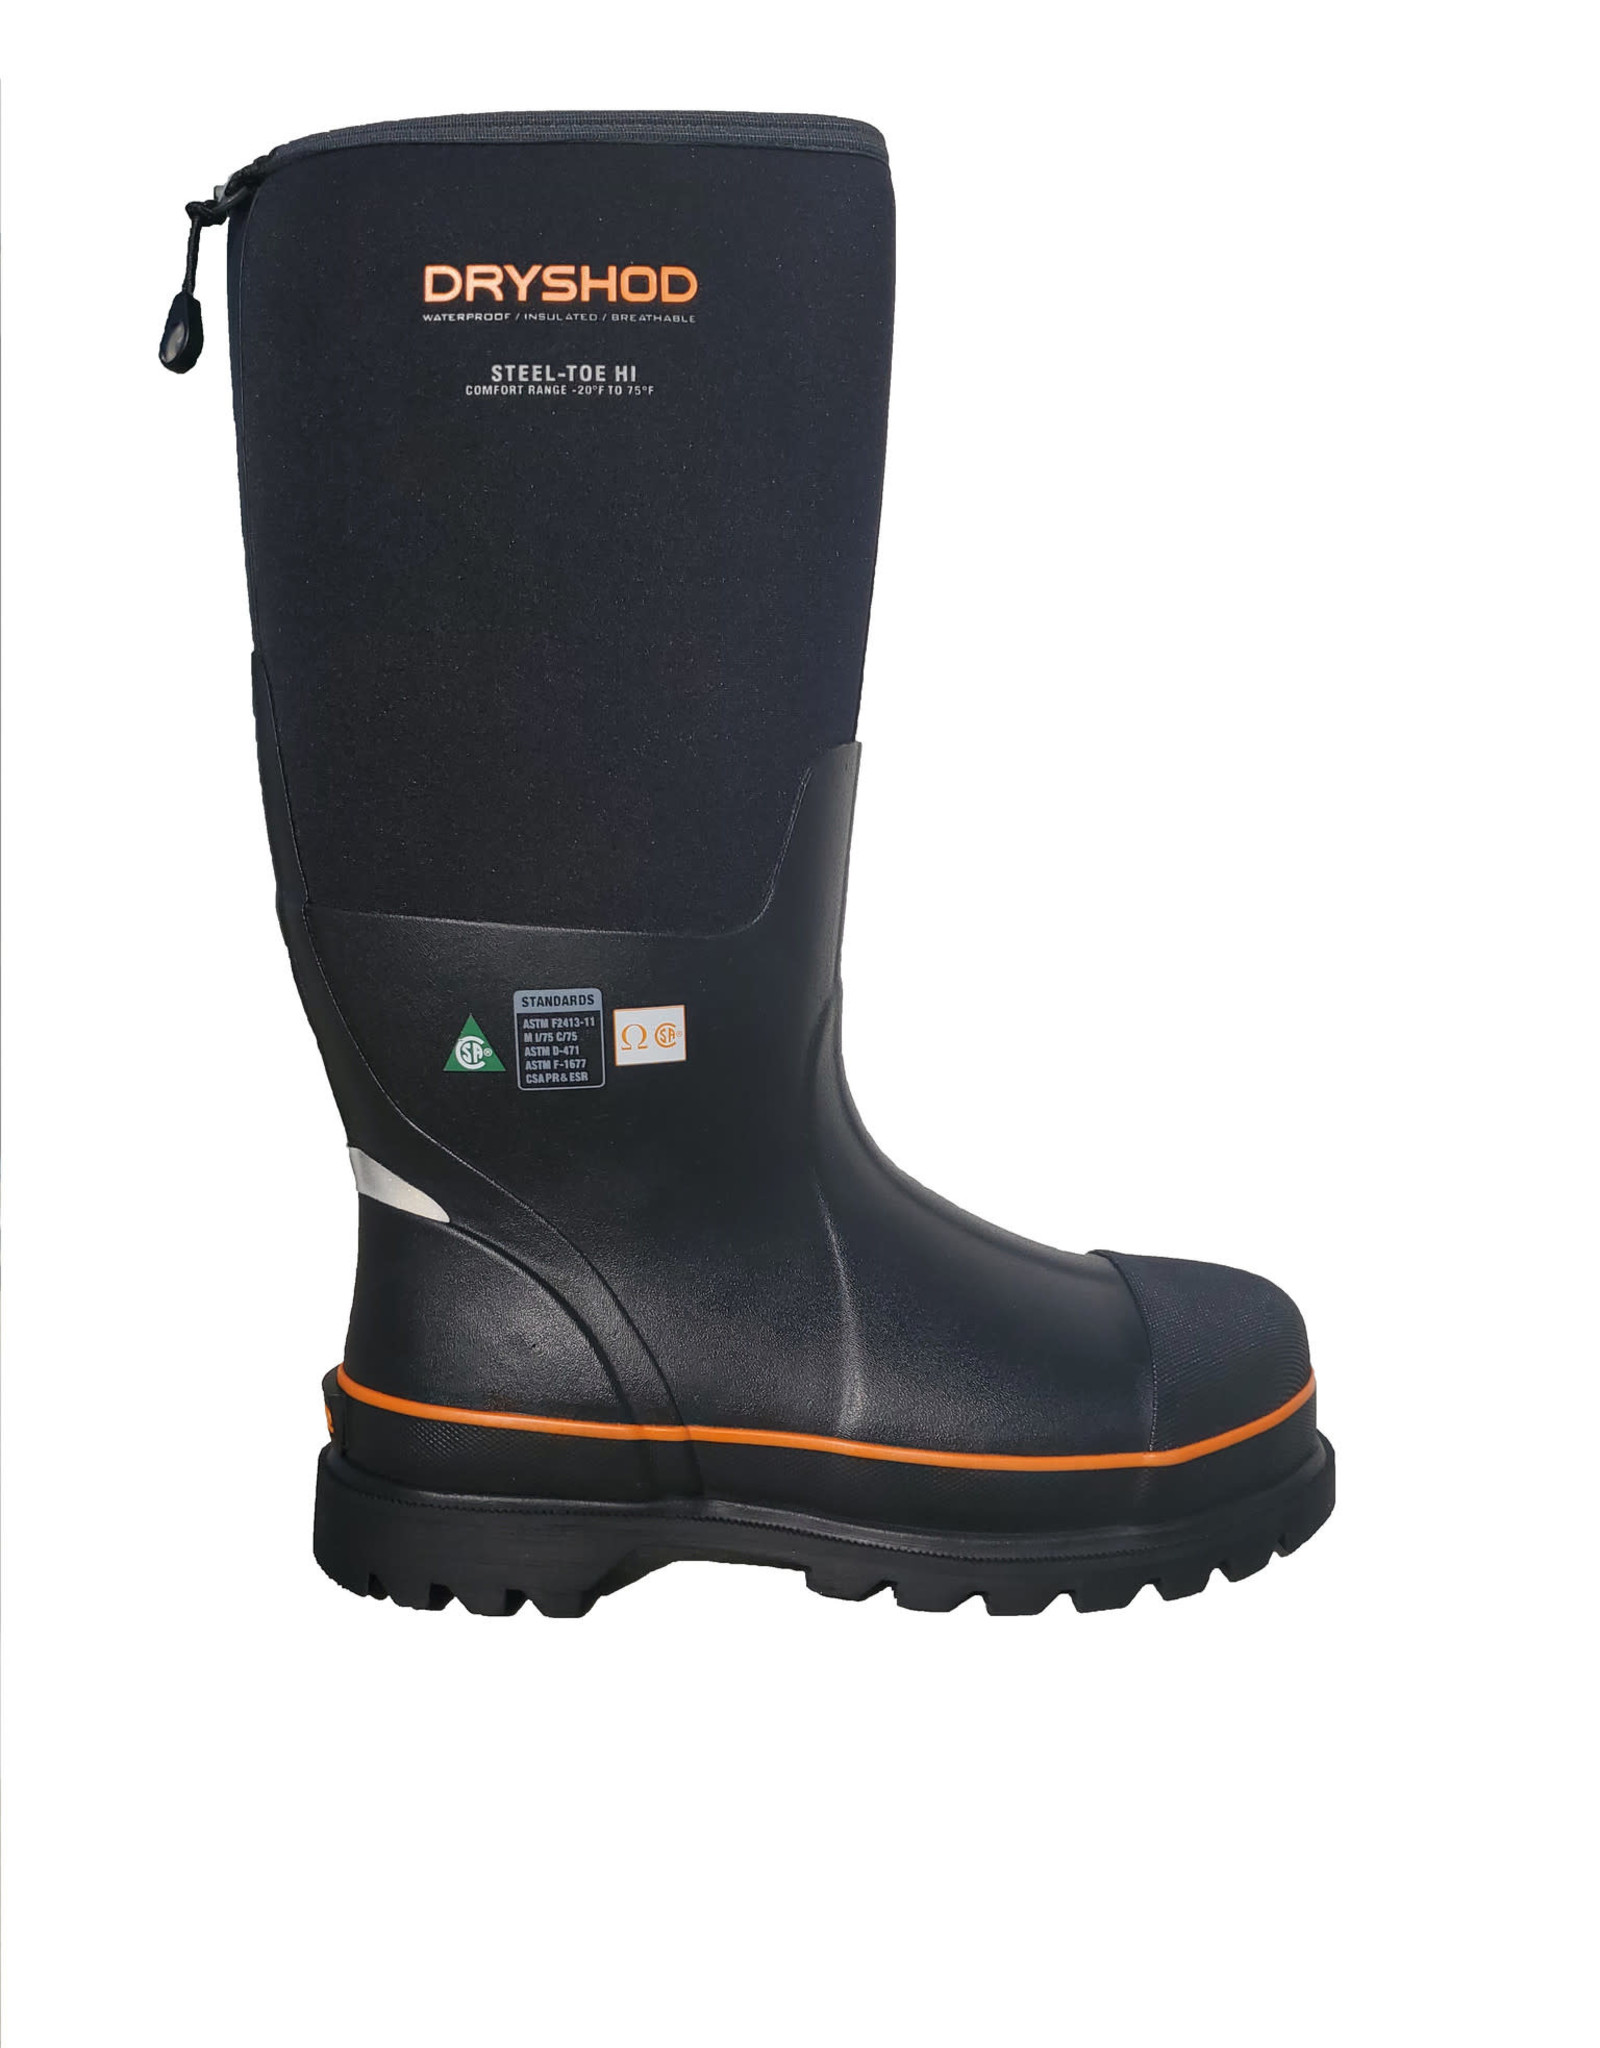 Dryshod Steel Toe CSA  Comfort Range -20F to +75F